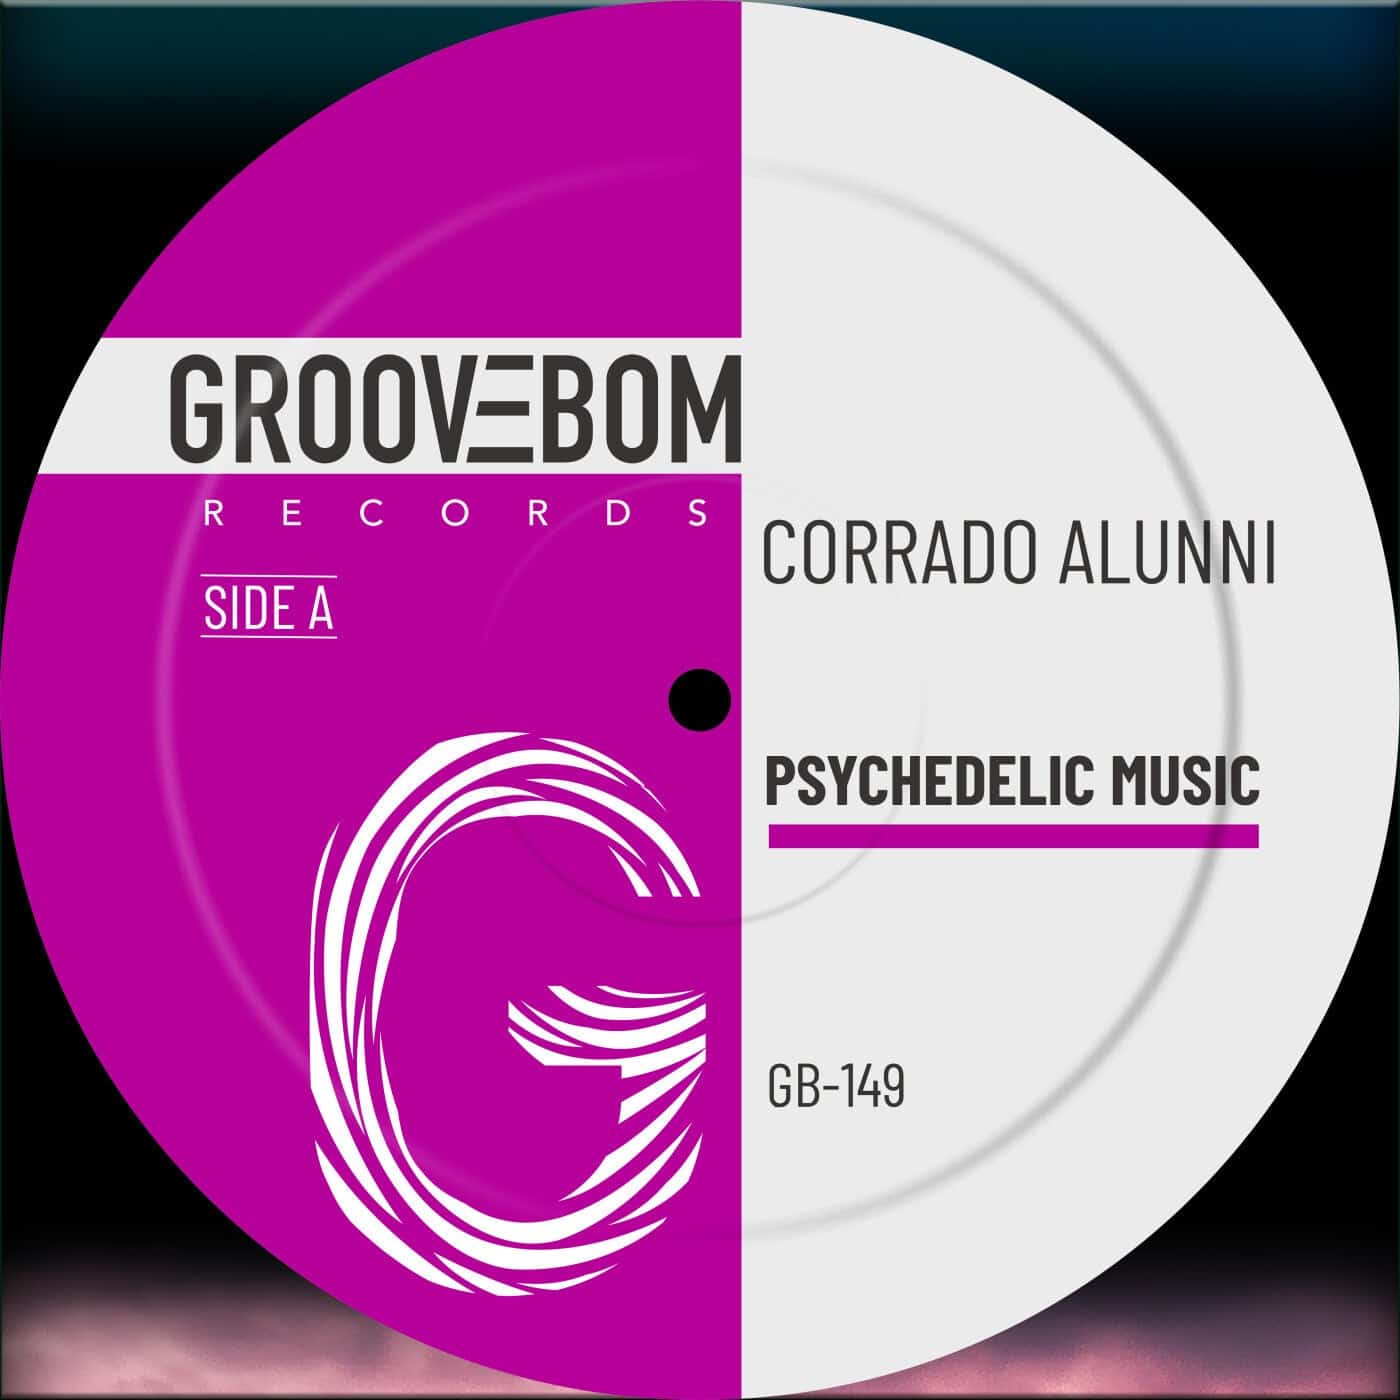 image cover: Corrado Alunni - Psychedelic Music on Groovebom Records